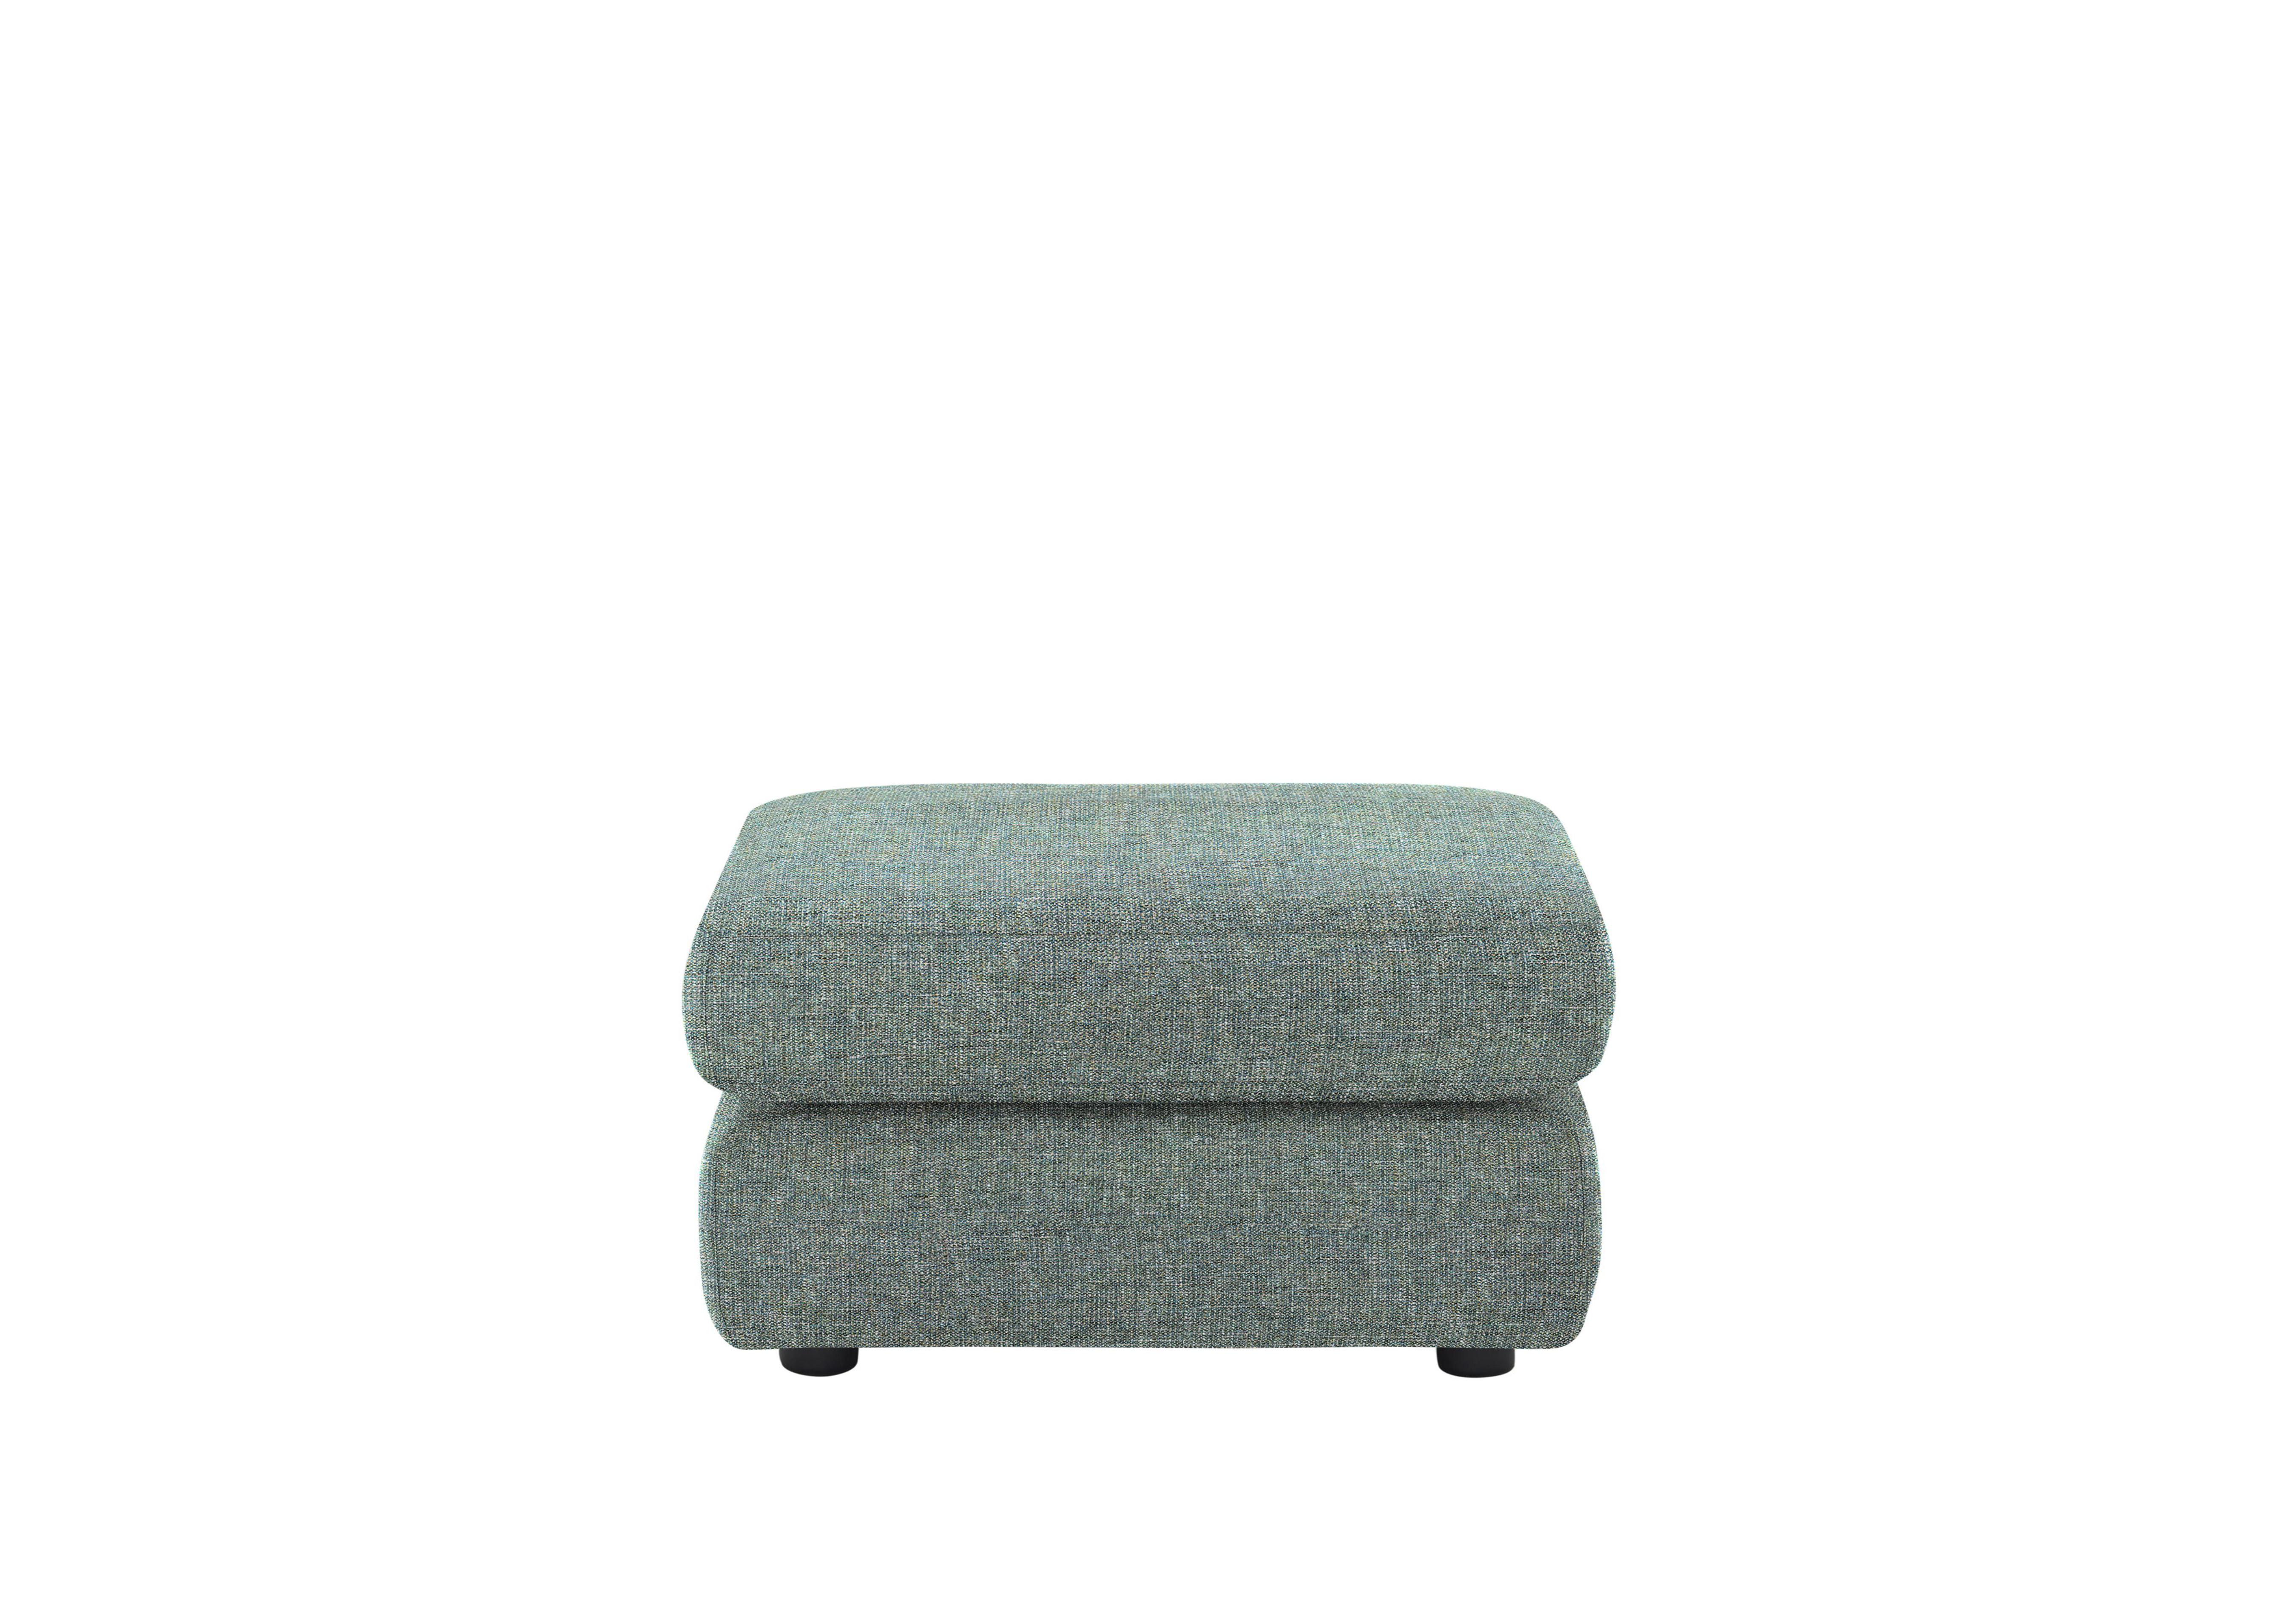 Avon Fabric Storage Footstool in A020 Dapple Kingfisher on Furniture Village